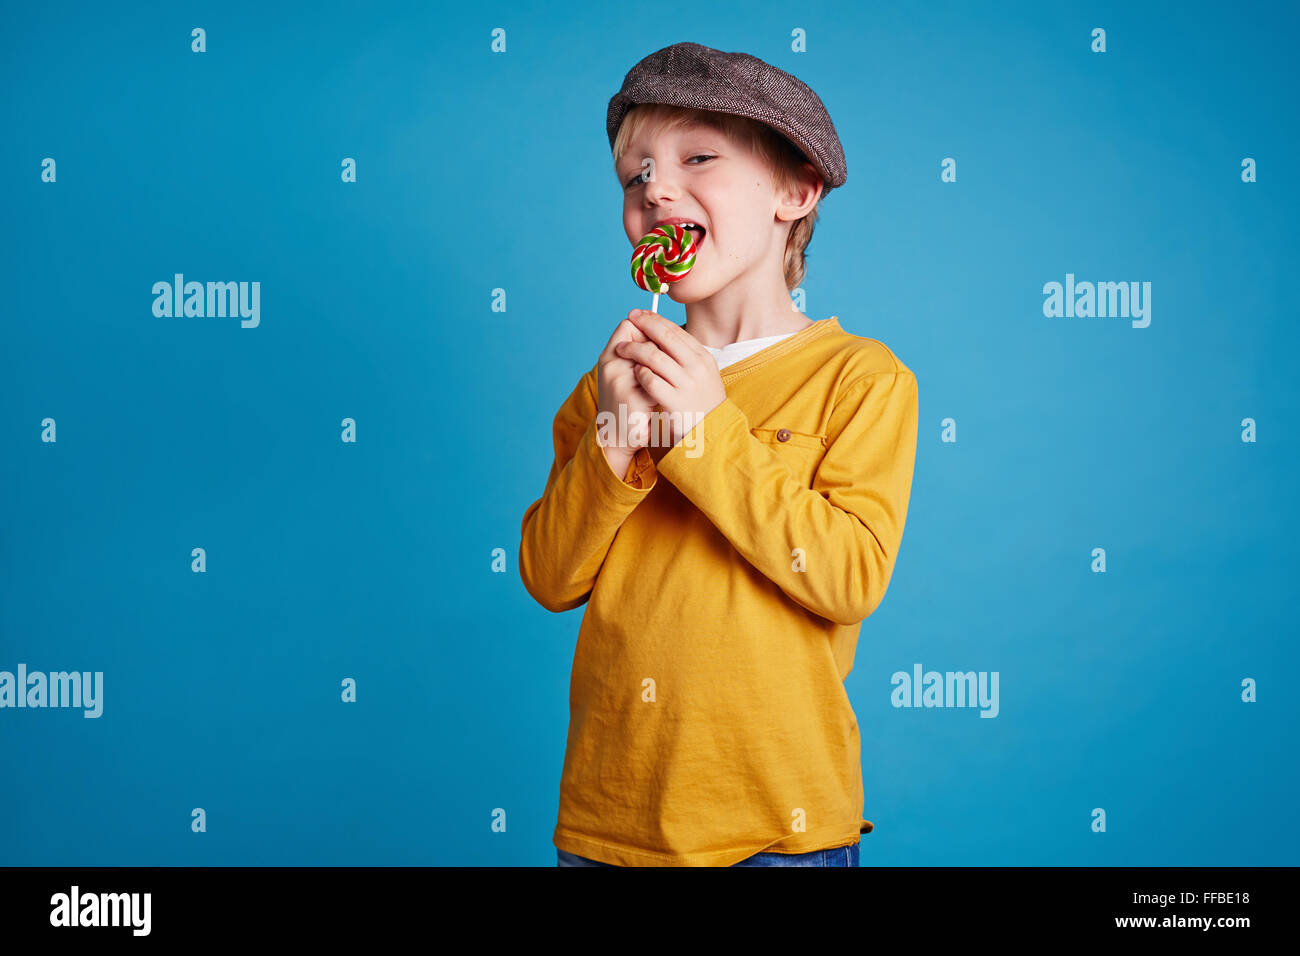 Happy boy in casualwear licking sugar candy Stock Photo